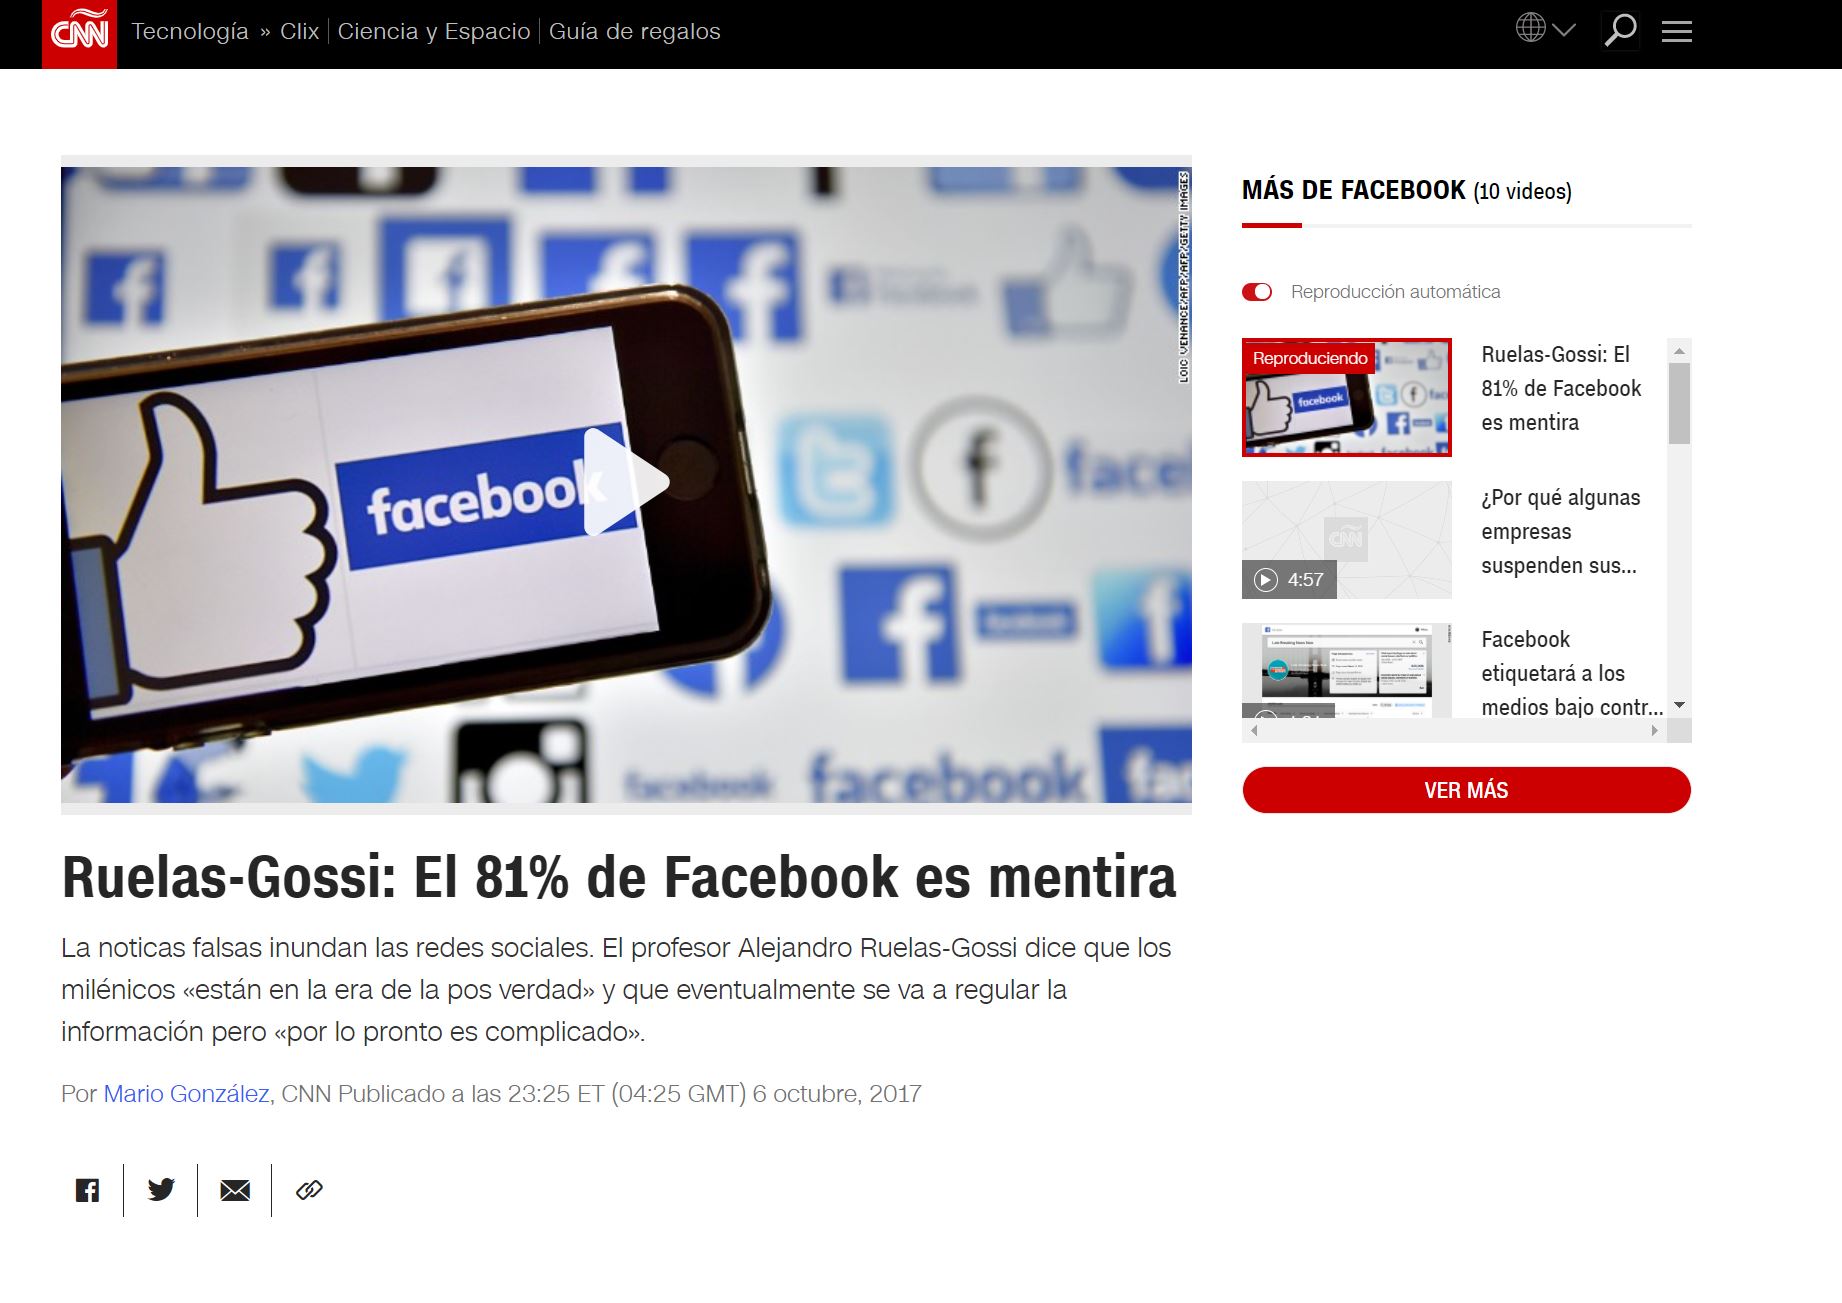 Ruelas-Gossi: 81% of Facebook is a lie